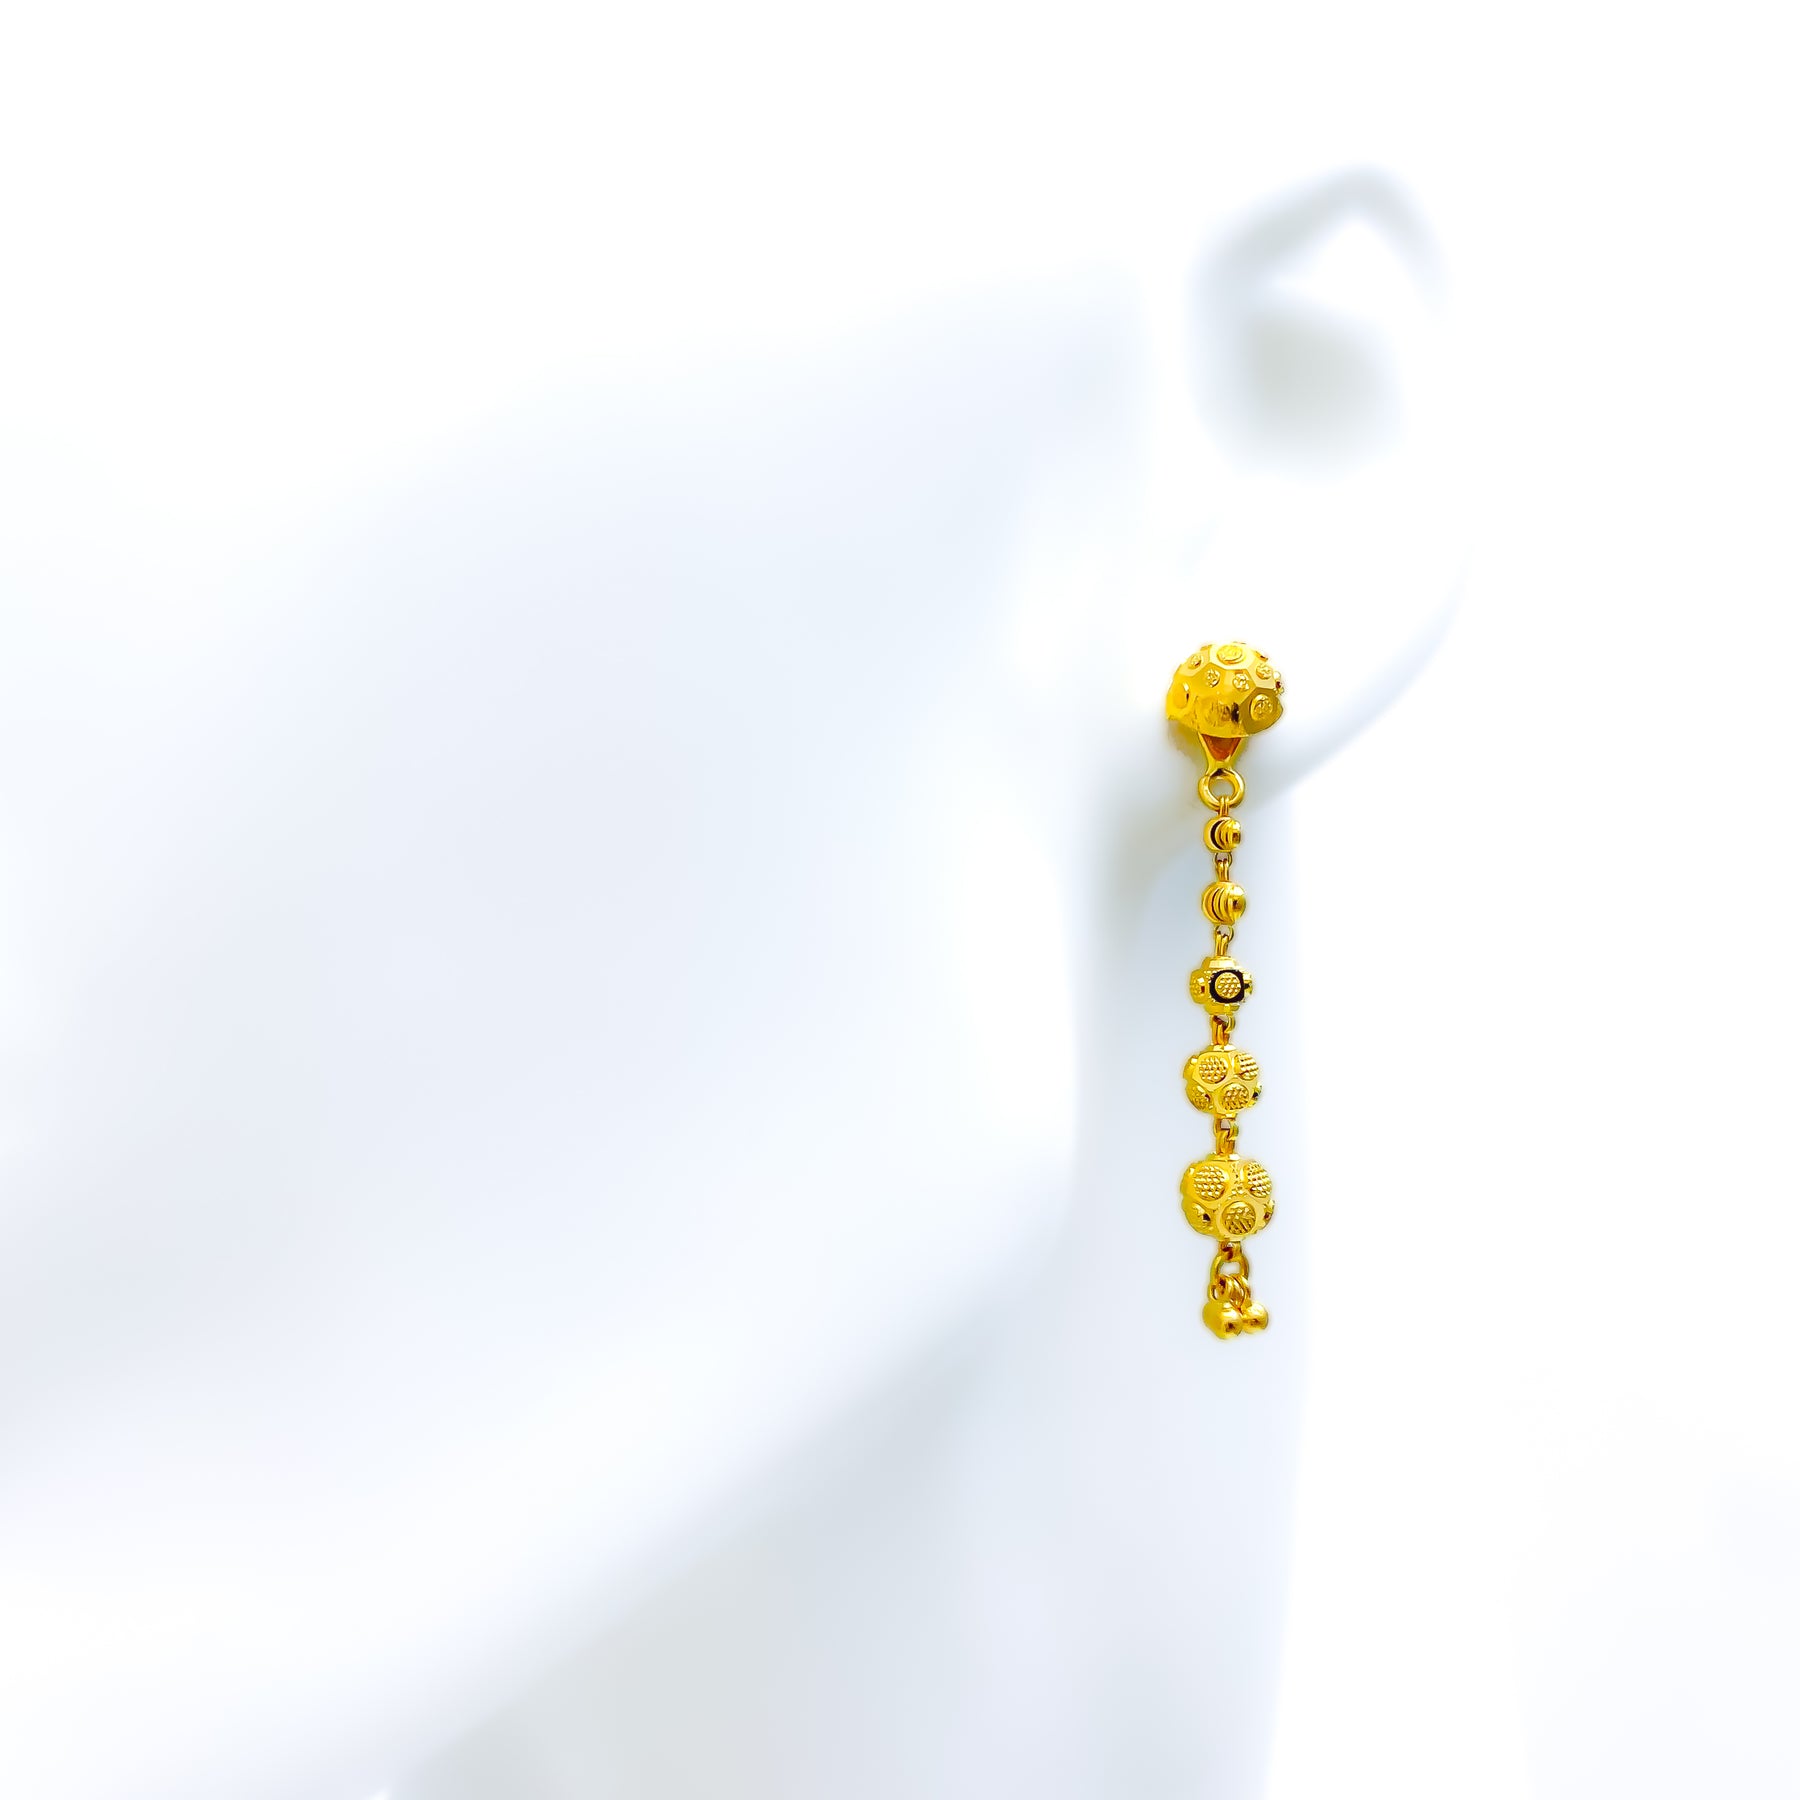 Fancy 10 gm Gold Long Earrings at Rs 51000/pair in Kadapa | ID: 20531142291